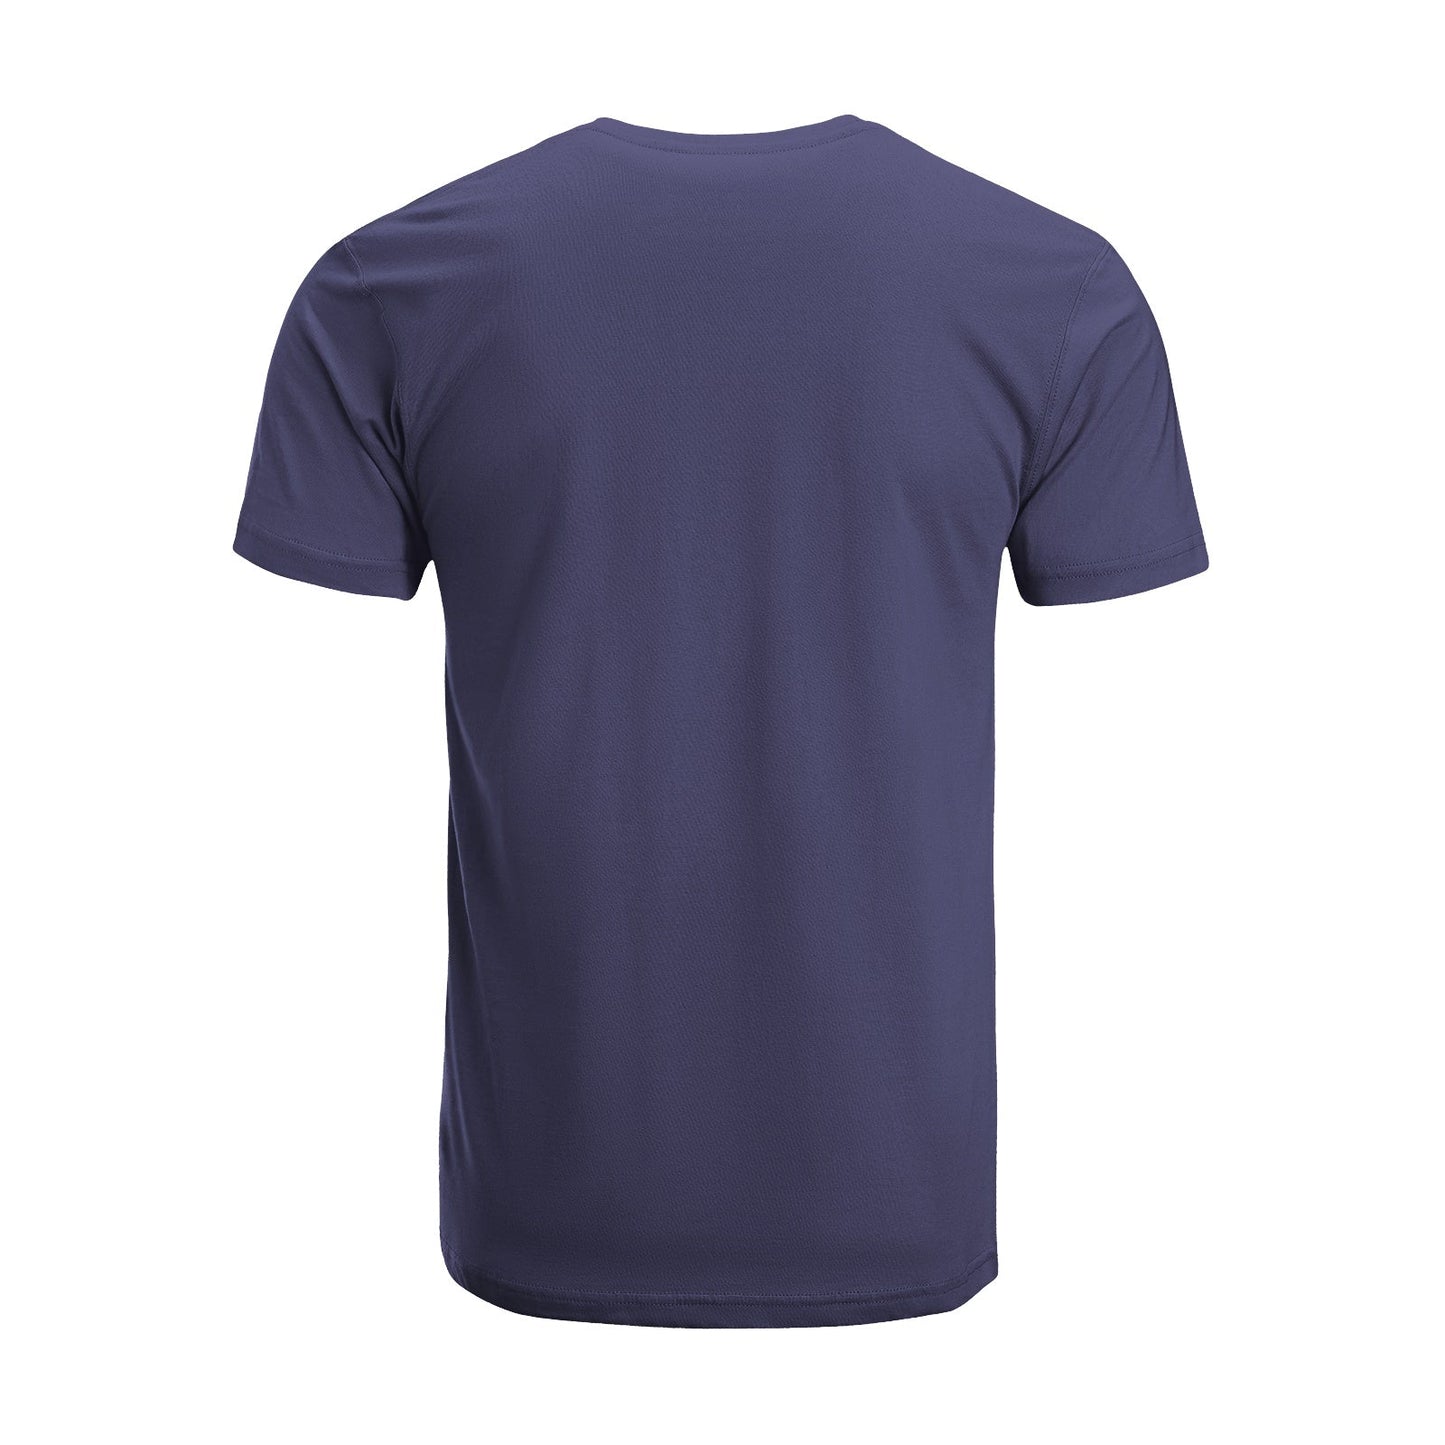 Unisex Short Sleeve Crew Neck Cotton Jersey T-Shirt Gym No. 08 - Tara-Outfits.com